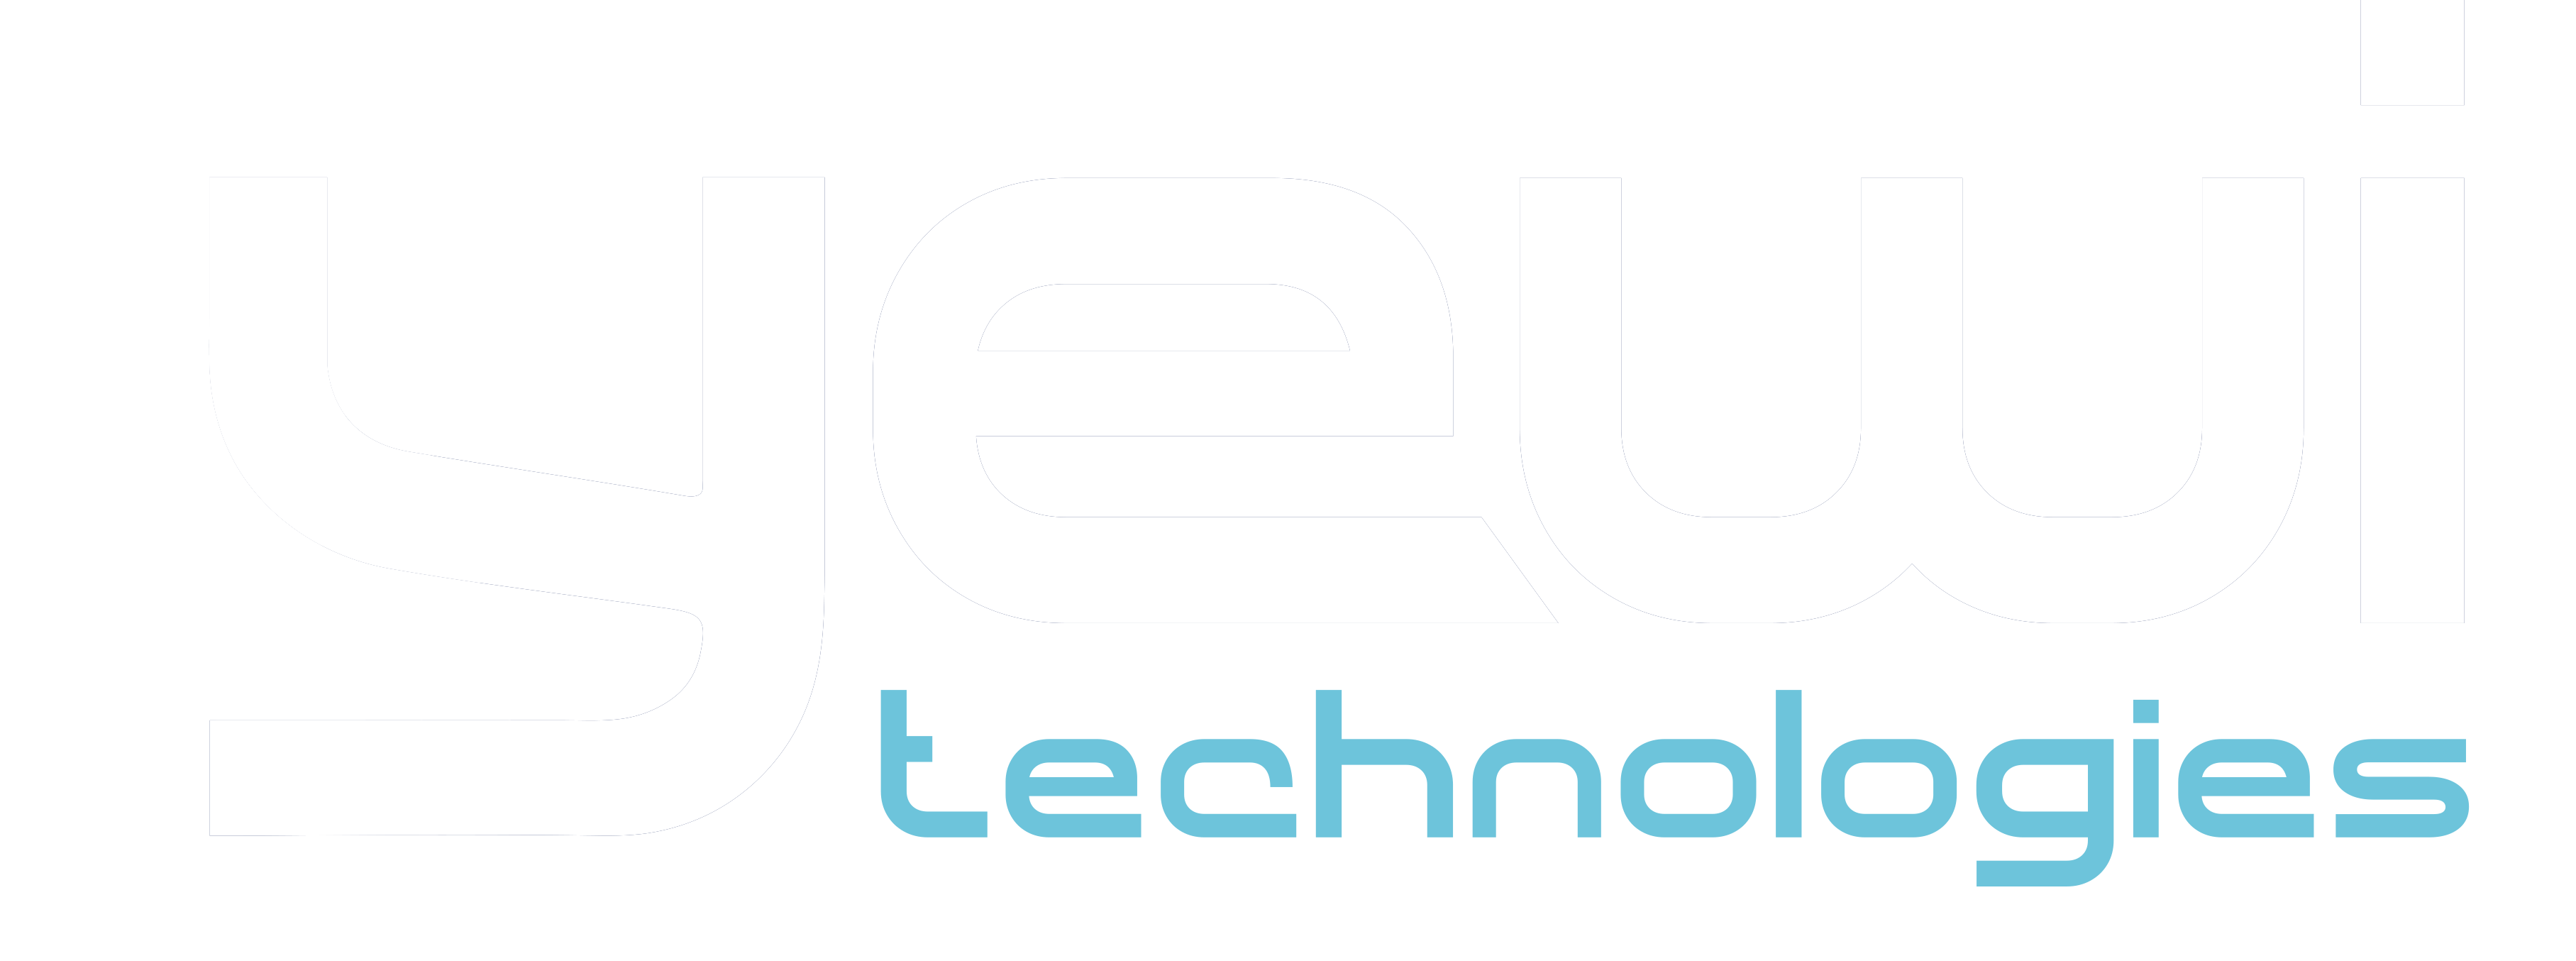 YEWI Technologies